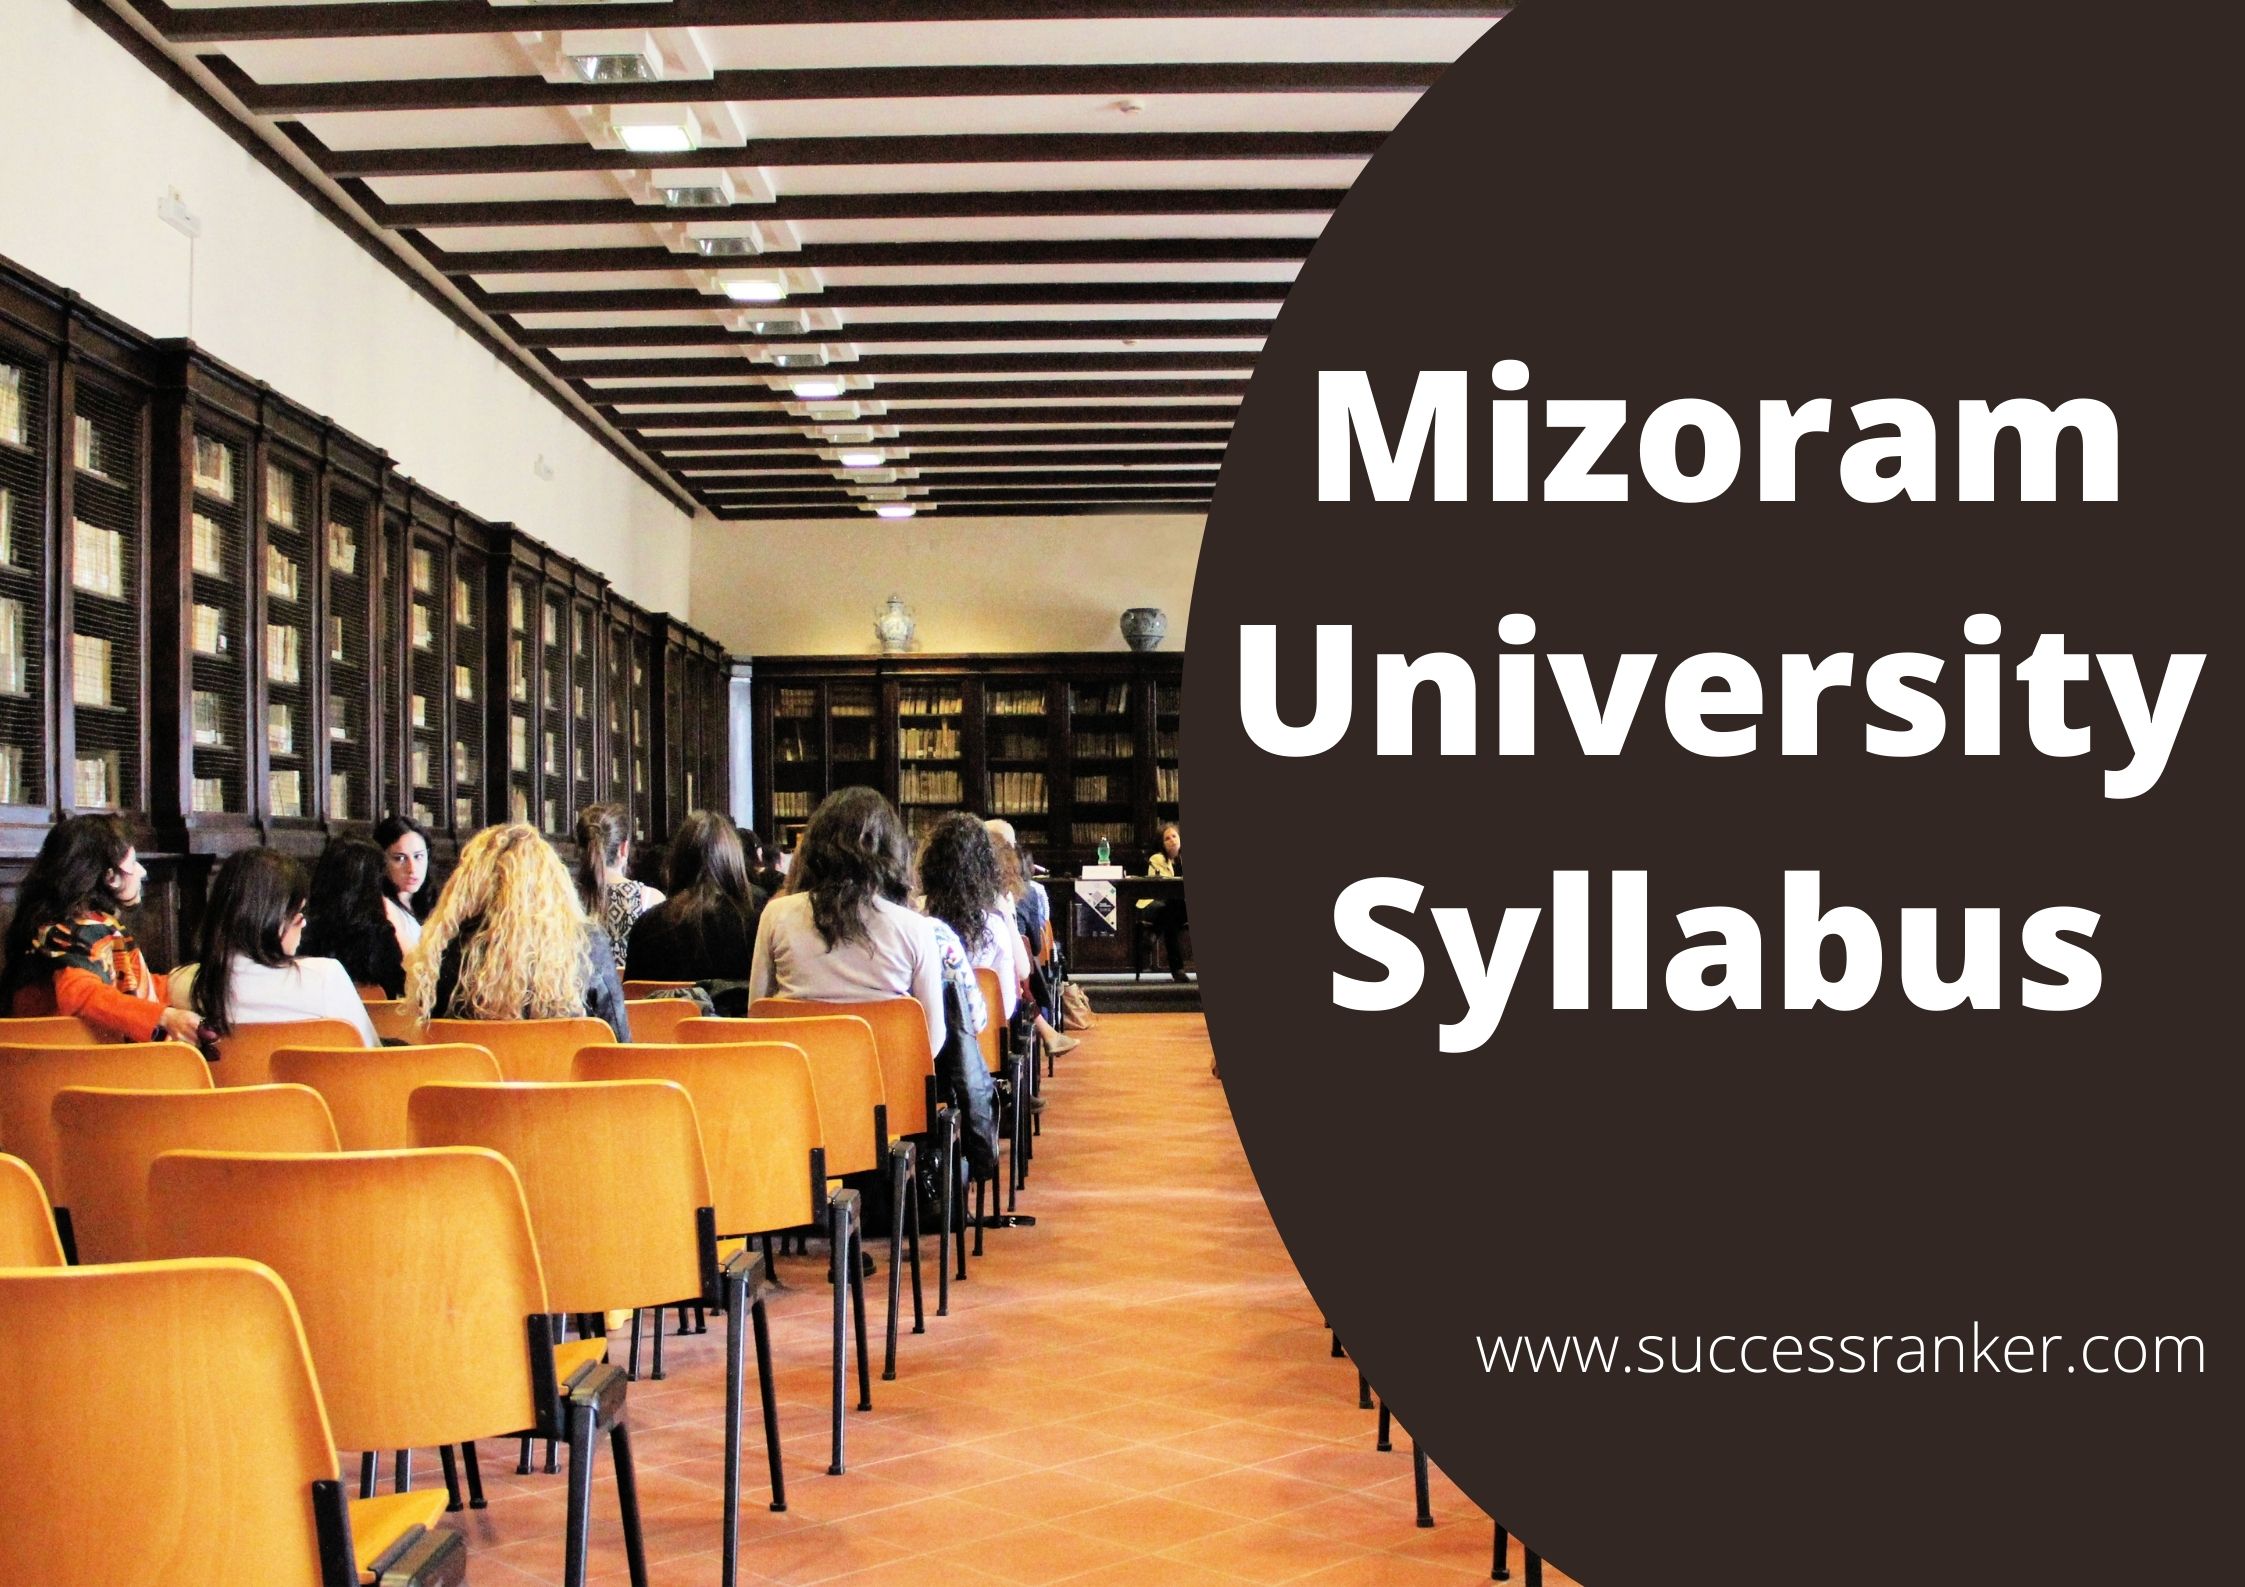 Mizoram University Syllabus